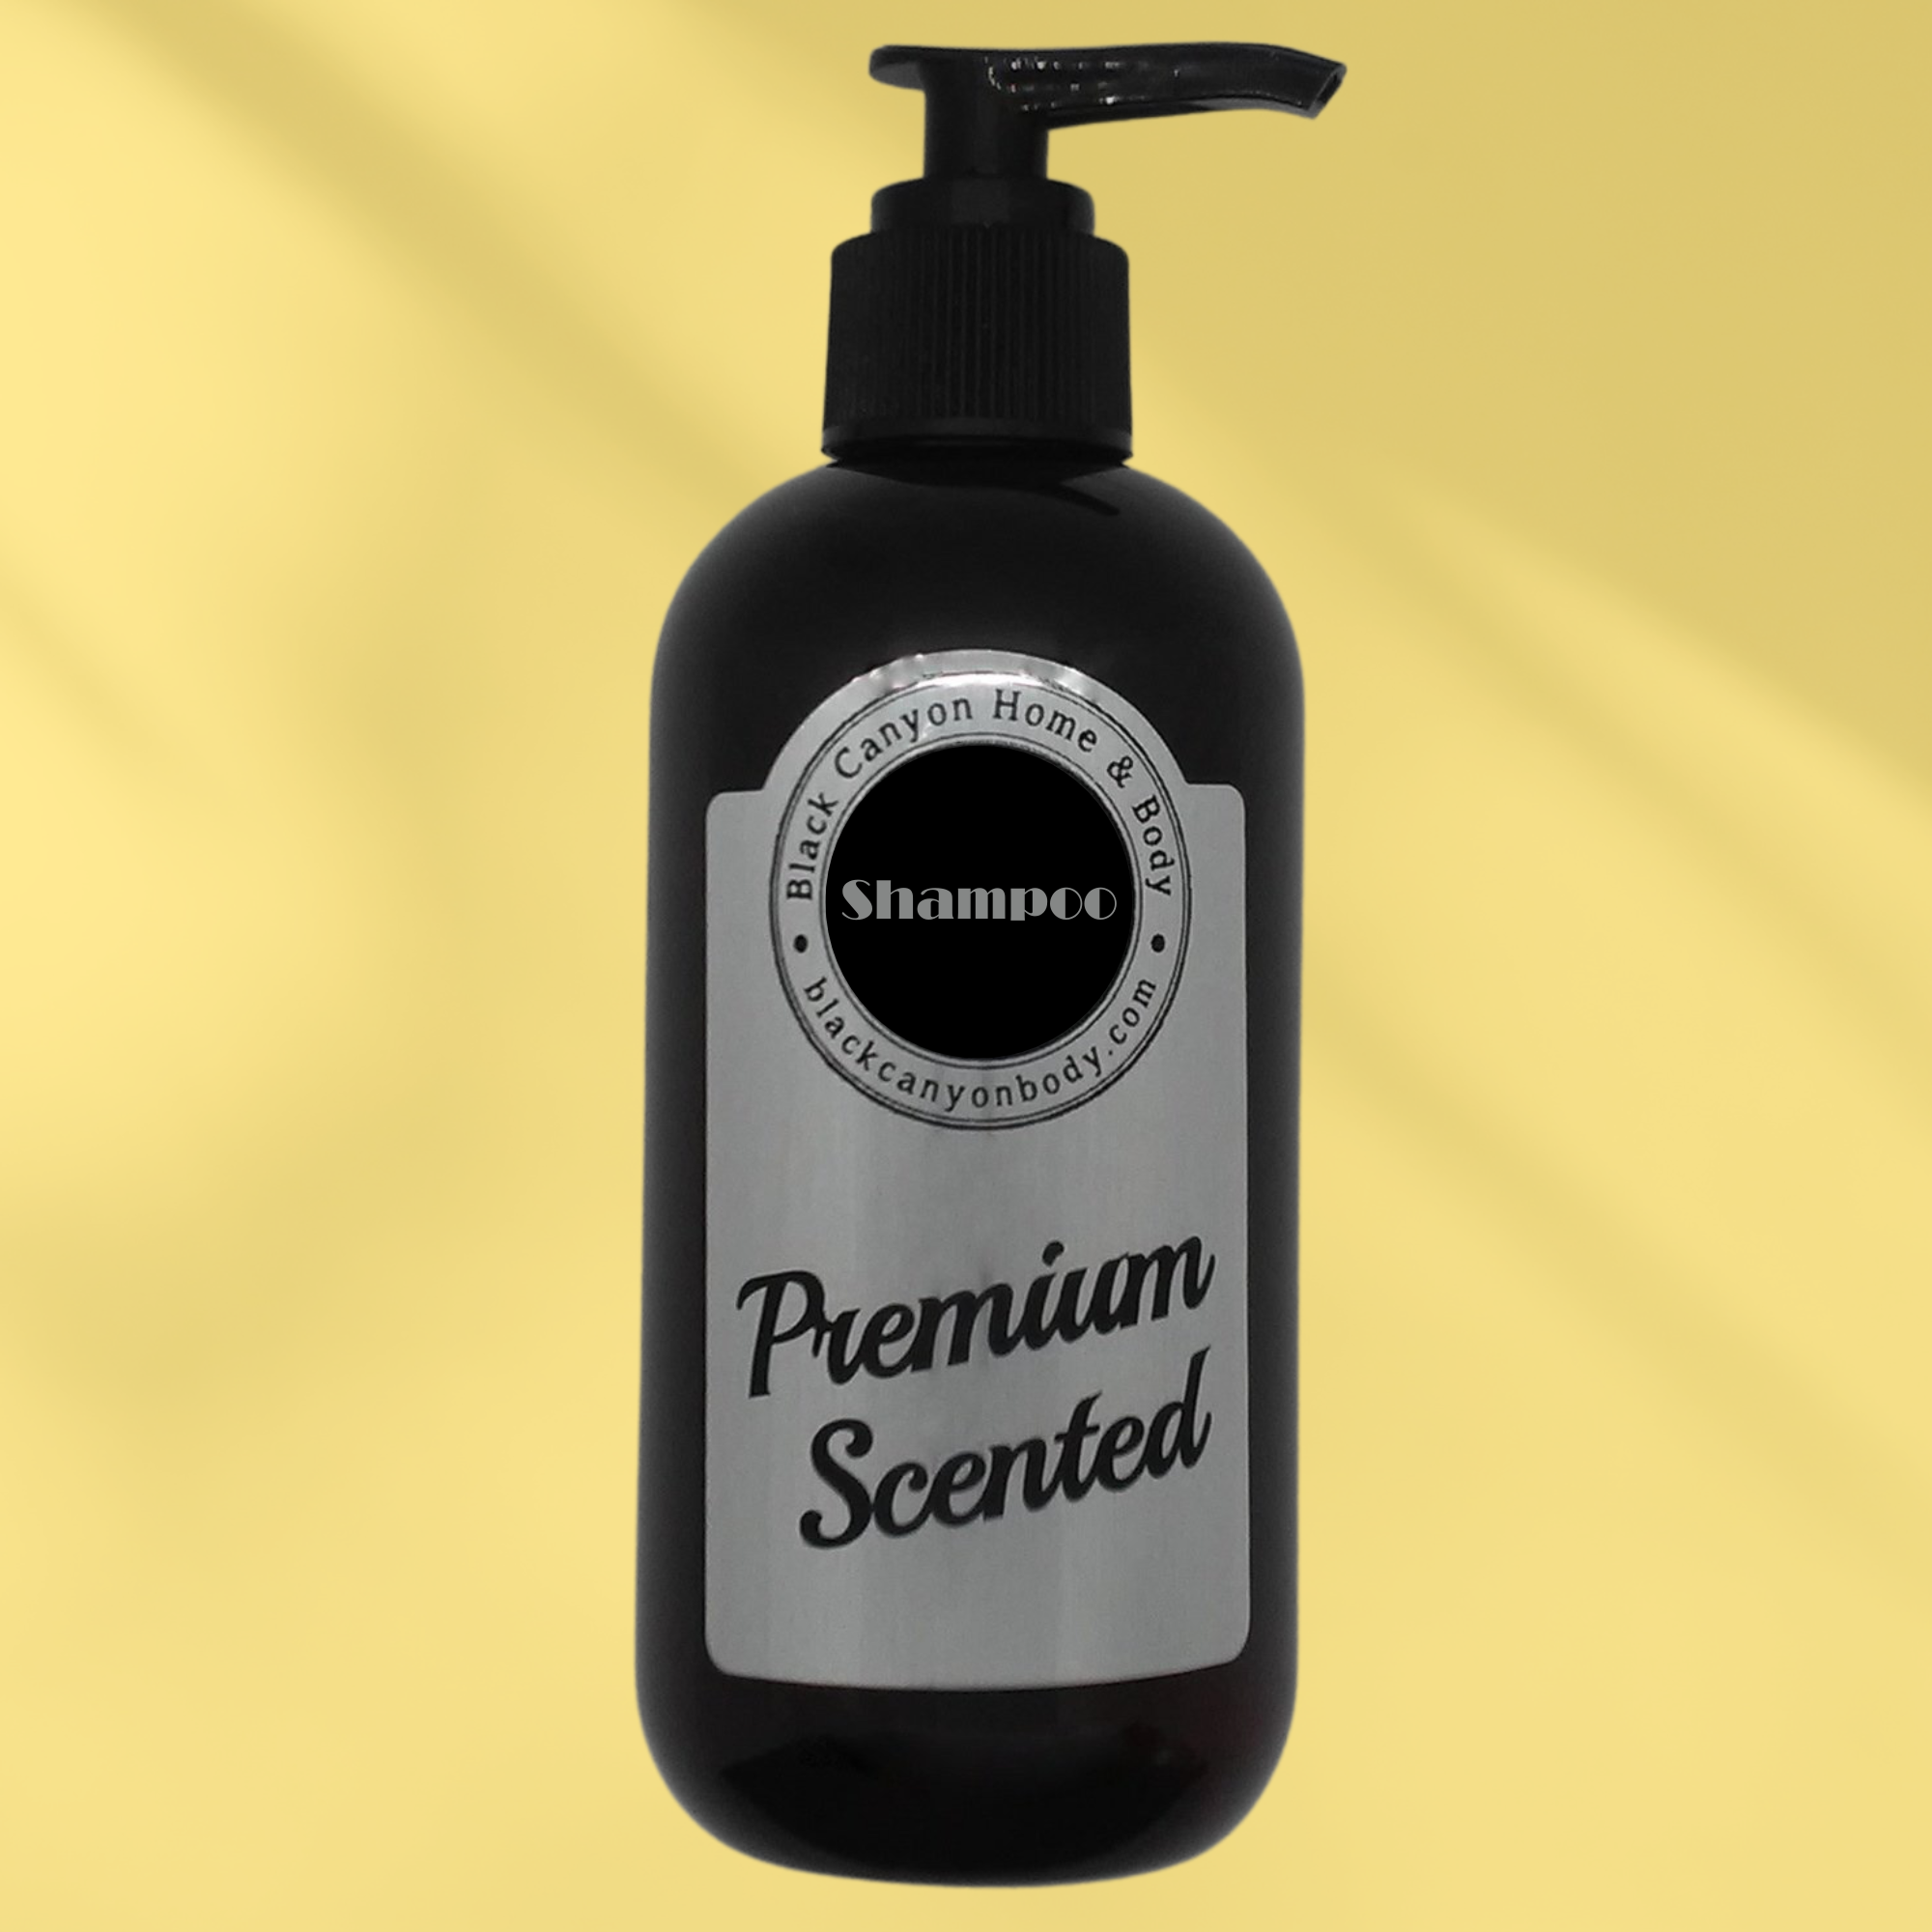 Black Canyon Lemon & Hyacinth Scented Shampoo with Argan Oil